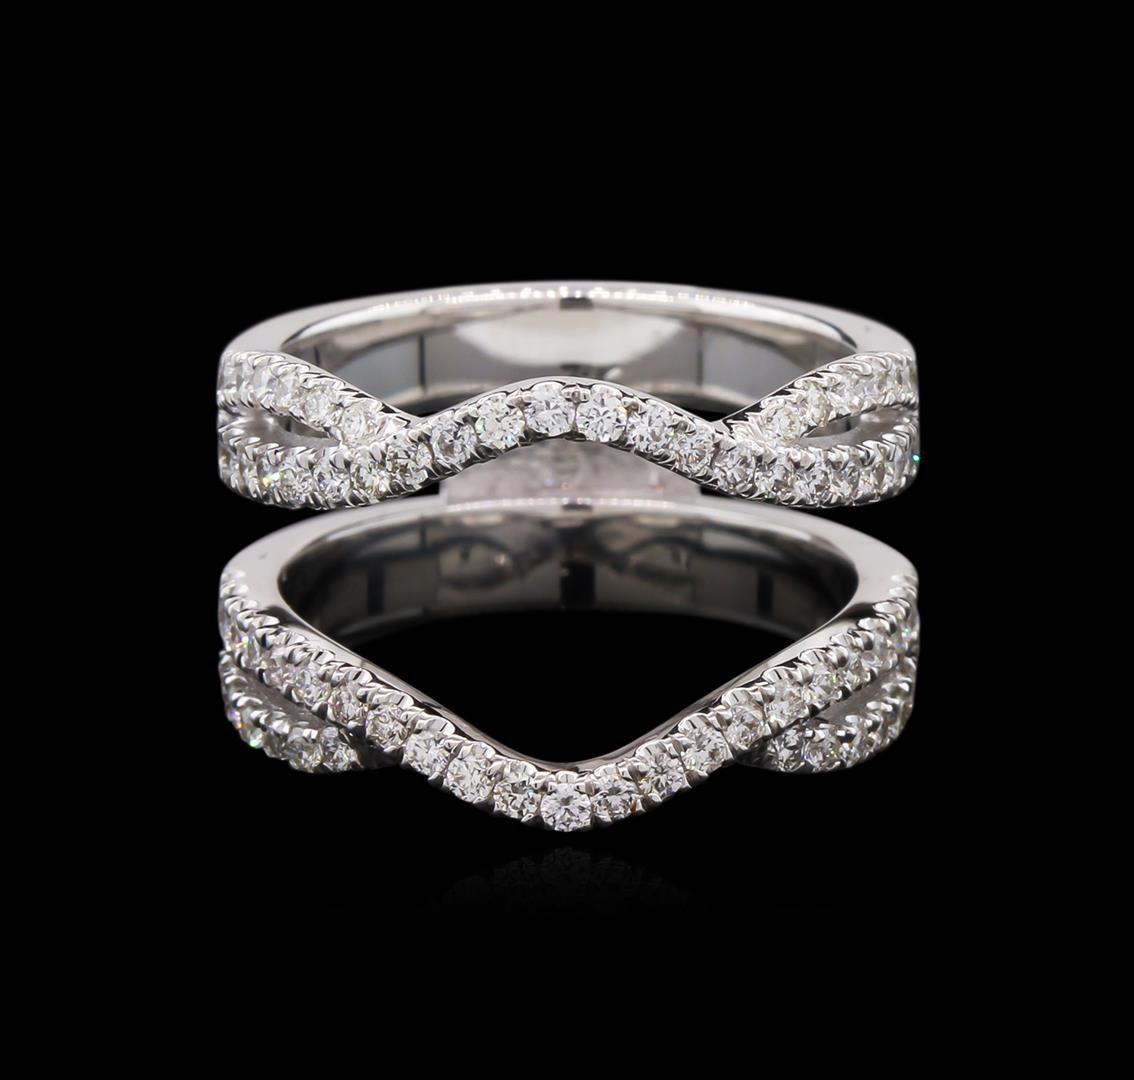 0.74 ctw Diamond Wedding Ring Guard - 18KT White Gold